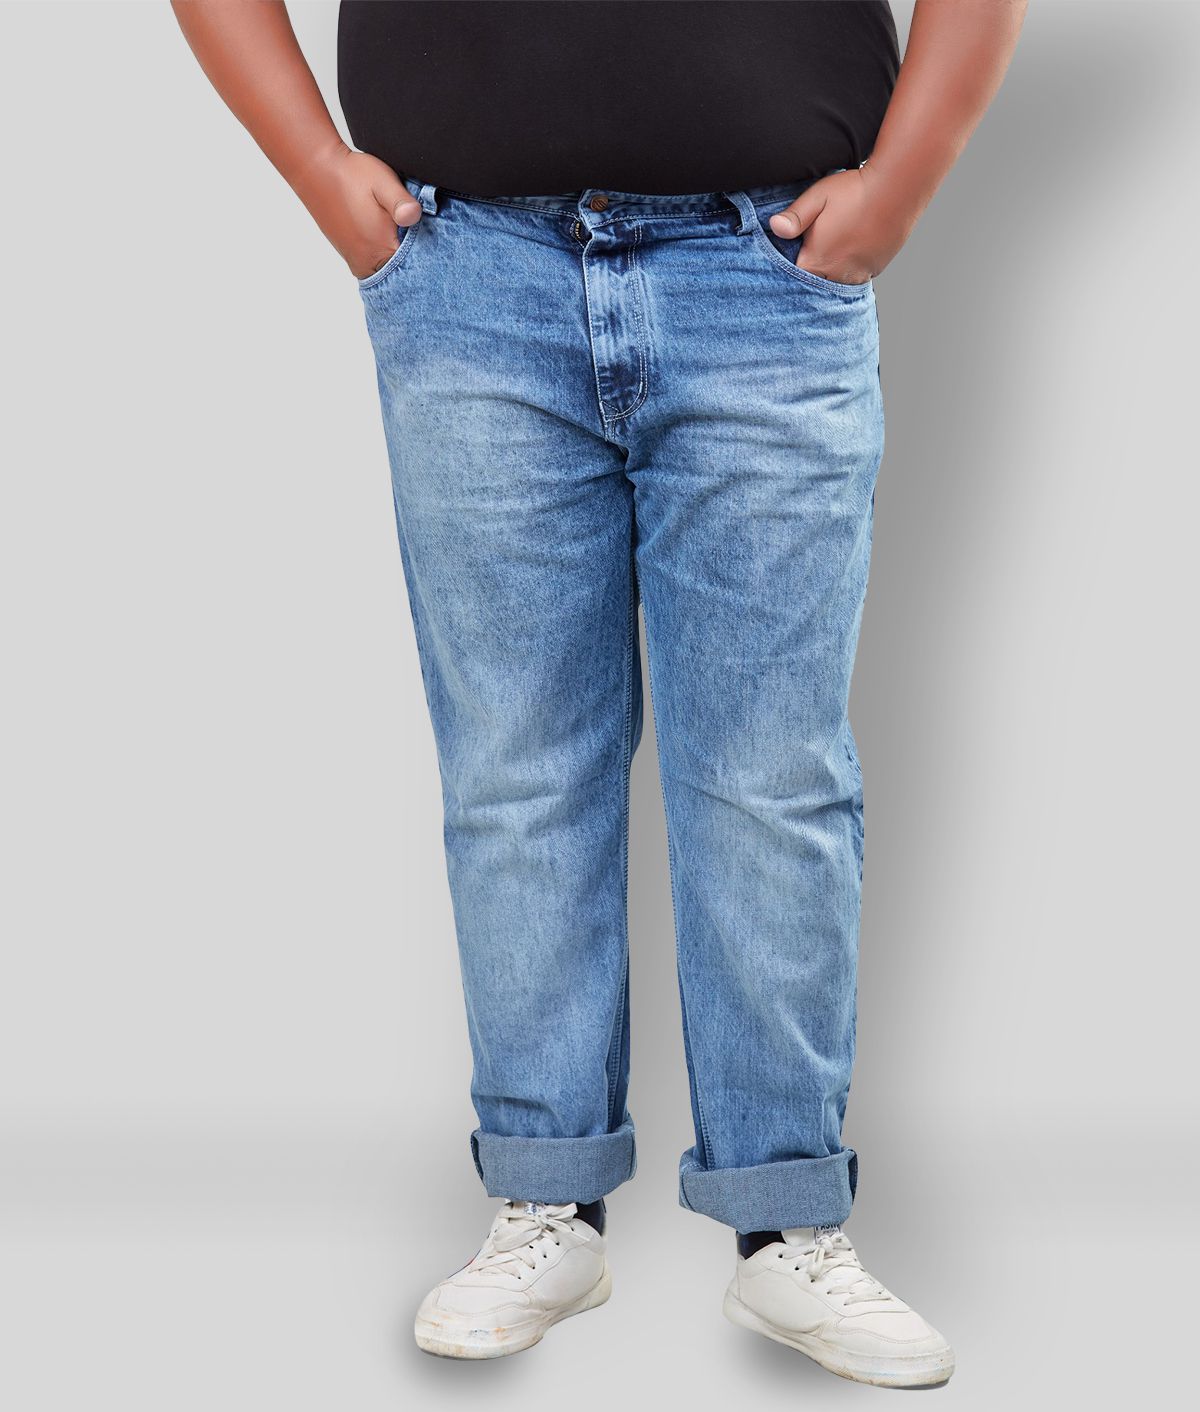 Rea-lize - Blue 100% Cotton Regular Fit Men's Jeans ( Pack of 1 )